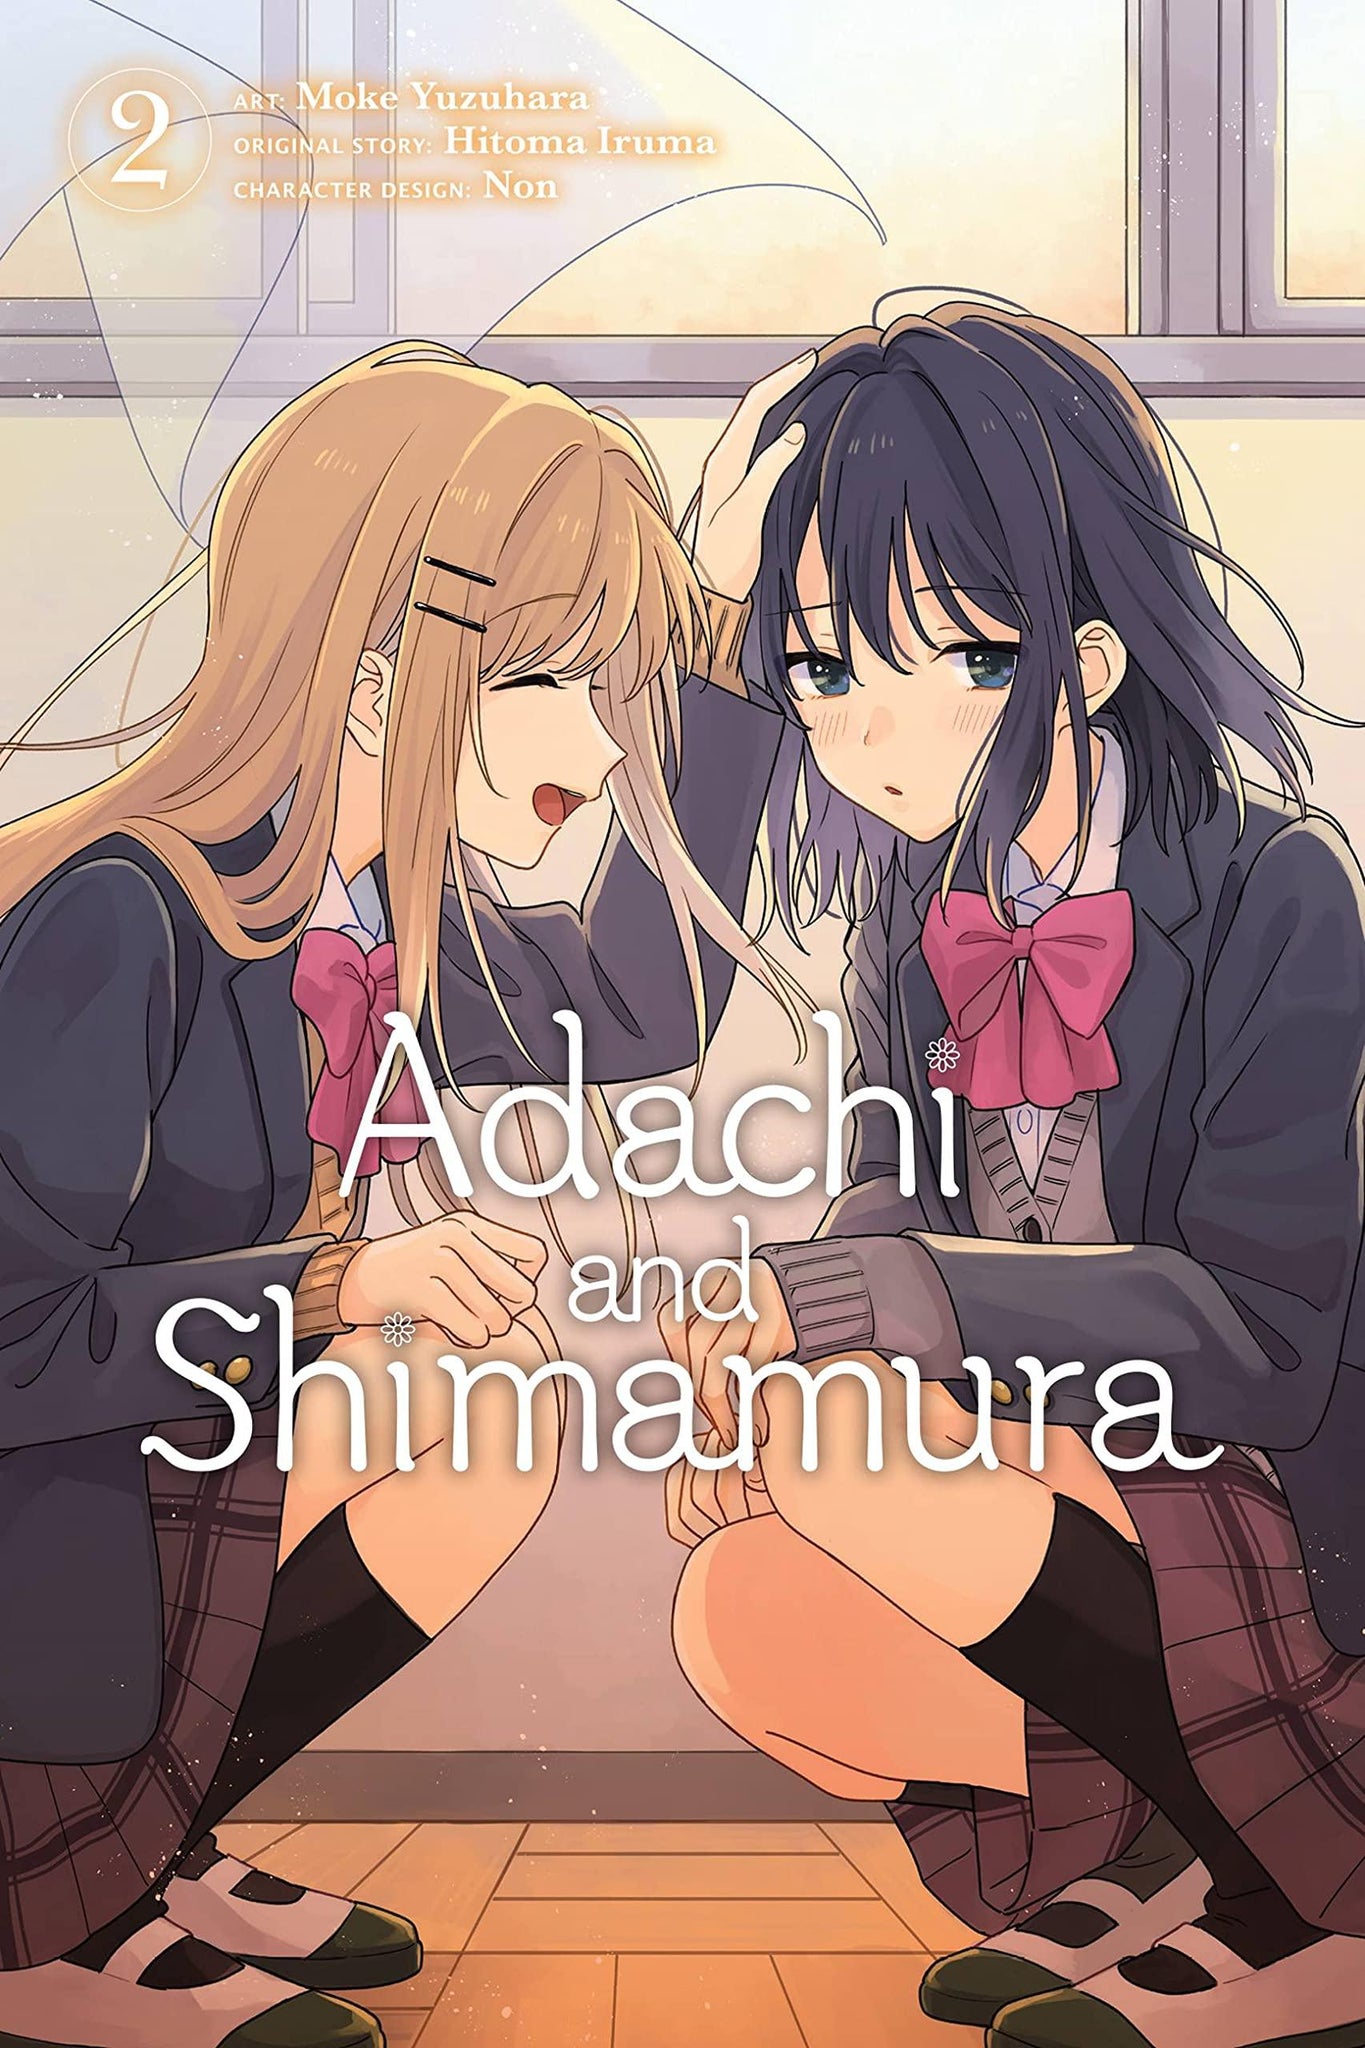 Adachi and Shimamura, Vol. 1 (Manga) 𝔭𝔩𝔰 𝔯𝔢𝔞𝔡 𝔟𝔦𝔬 - Depop